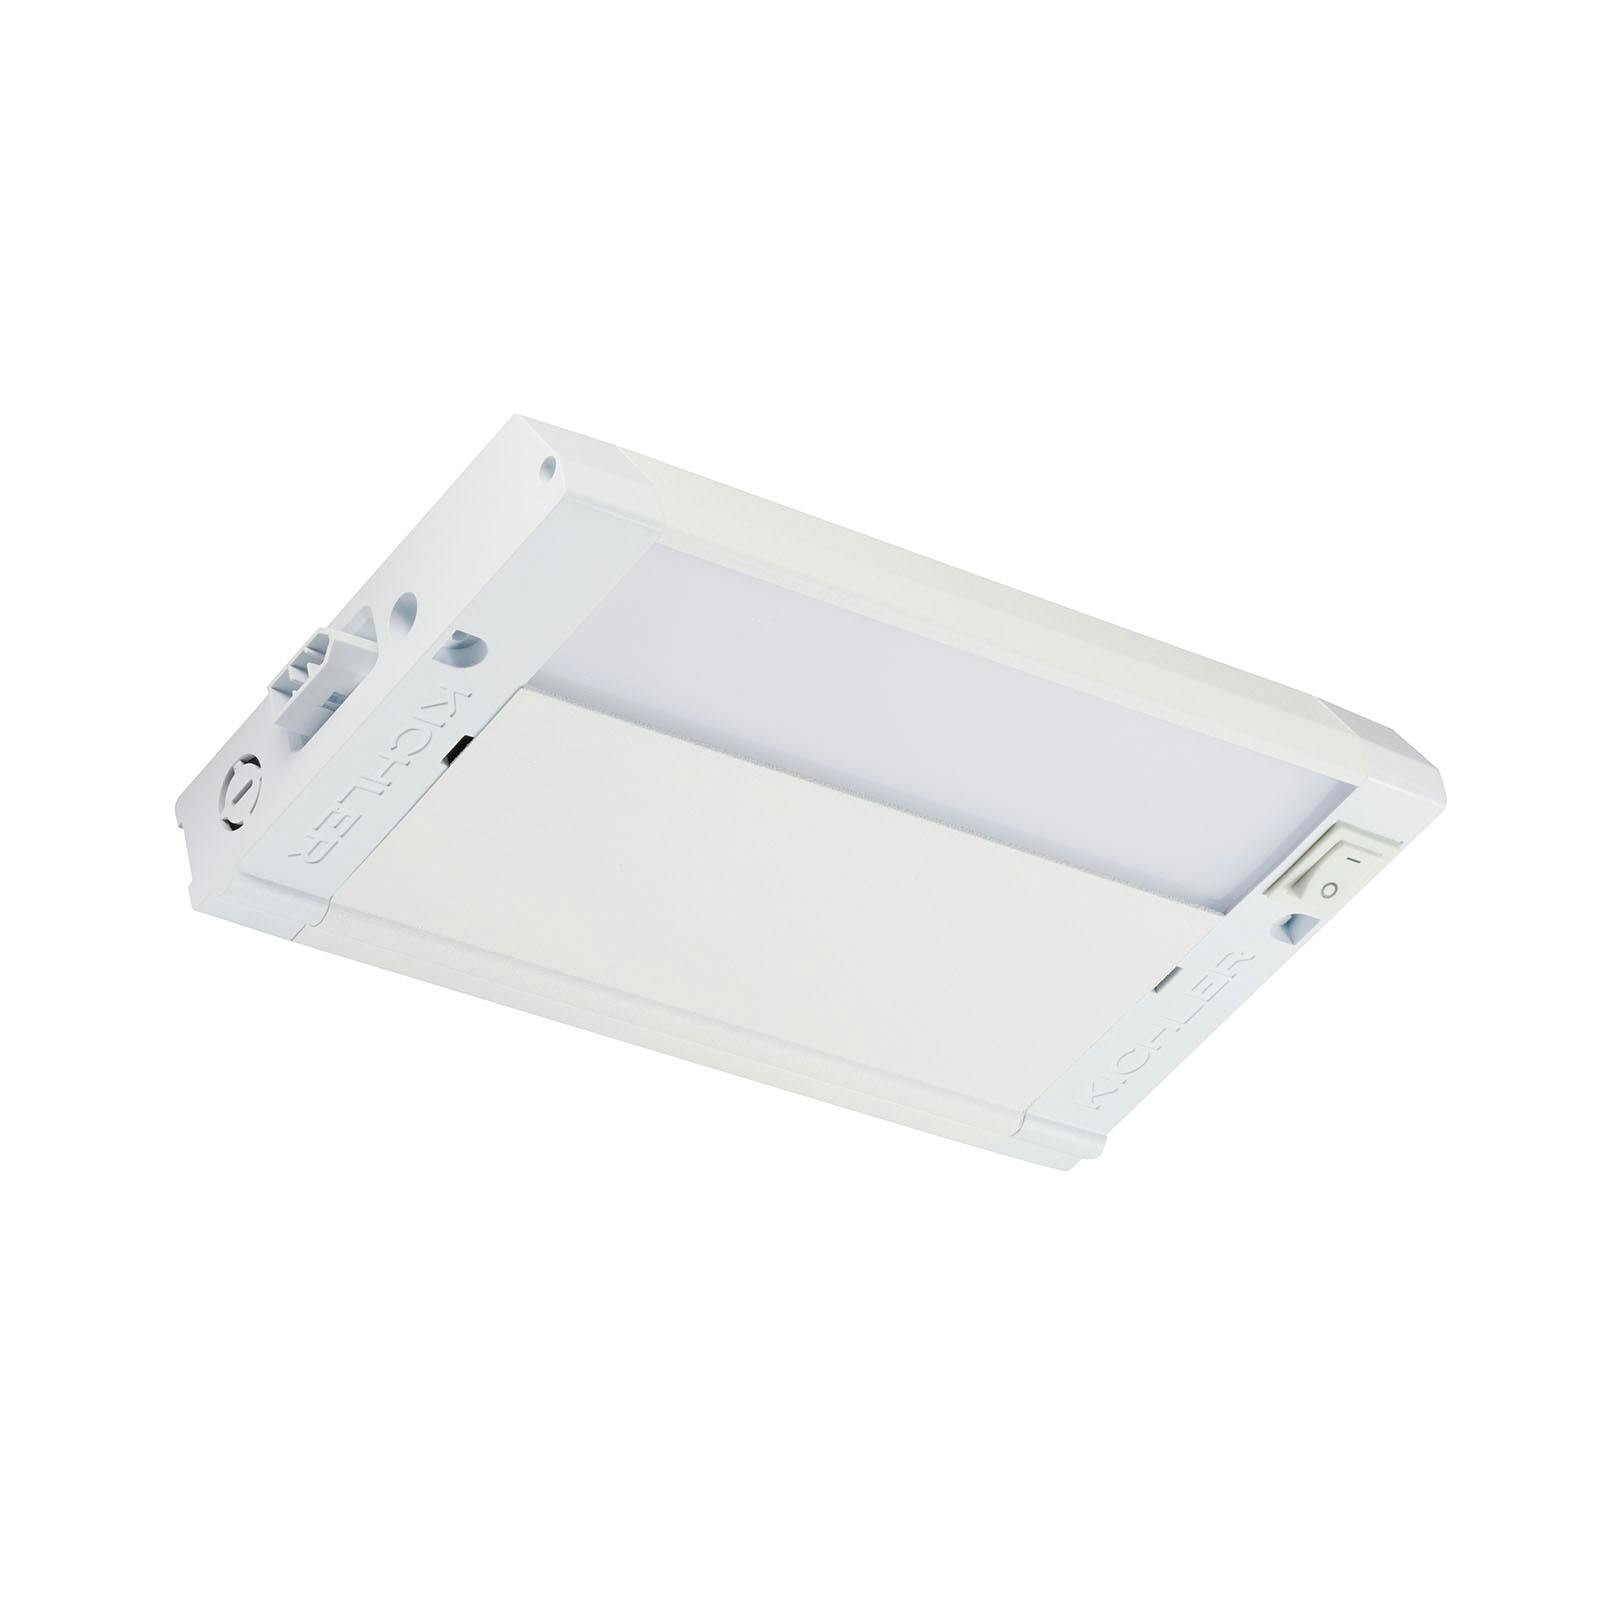 4U 8" 3000K LED Cabinet Light White on a white background